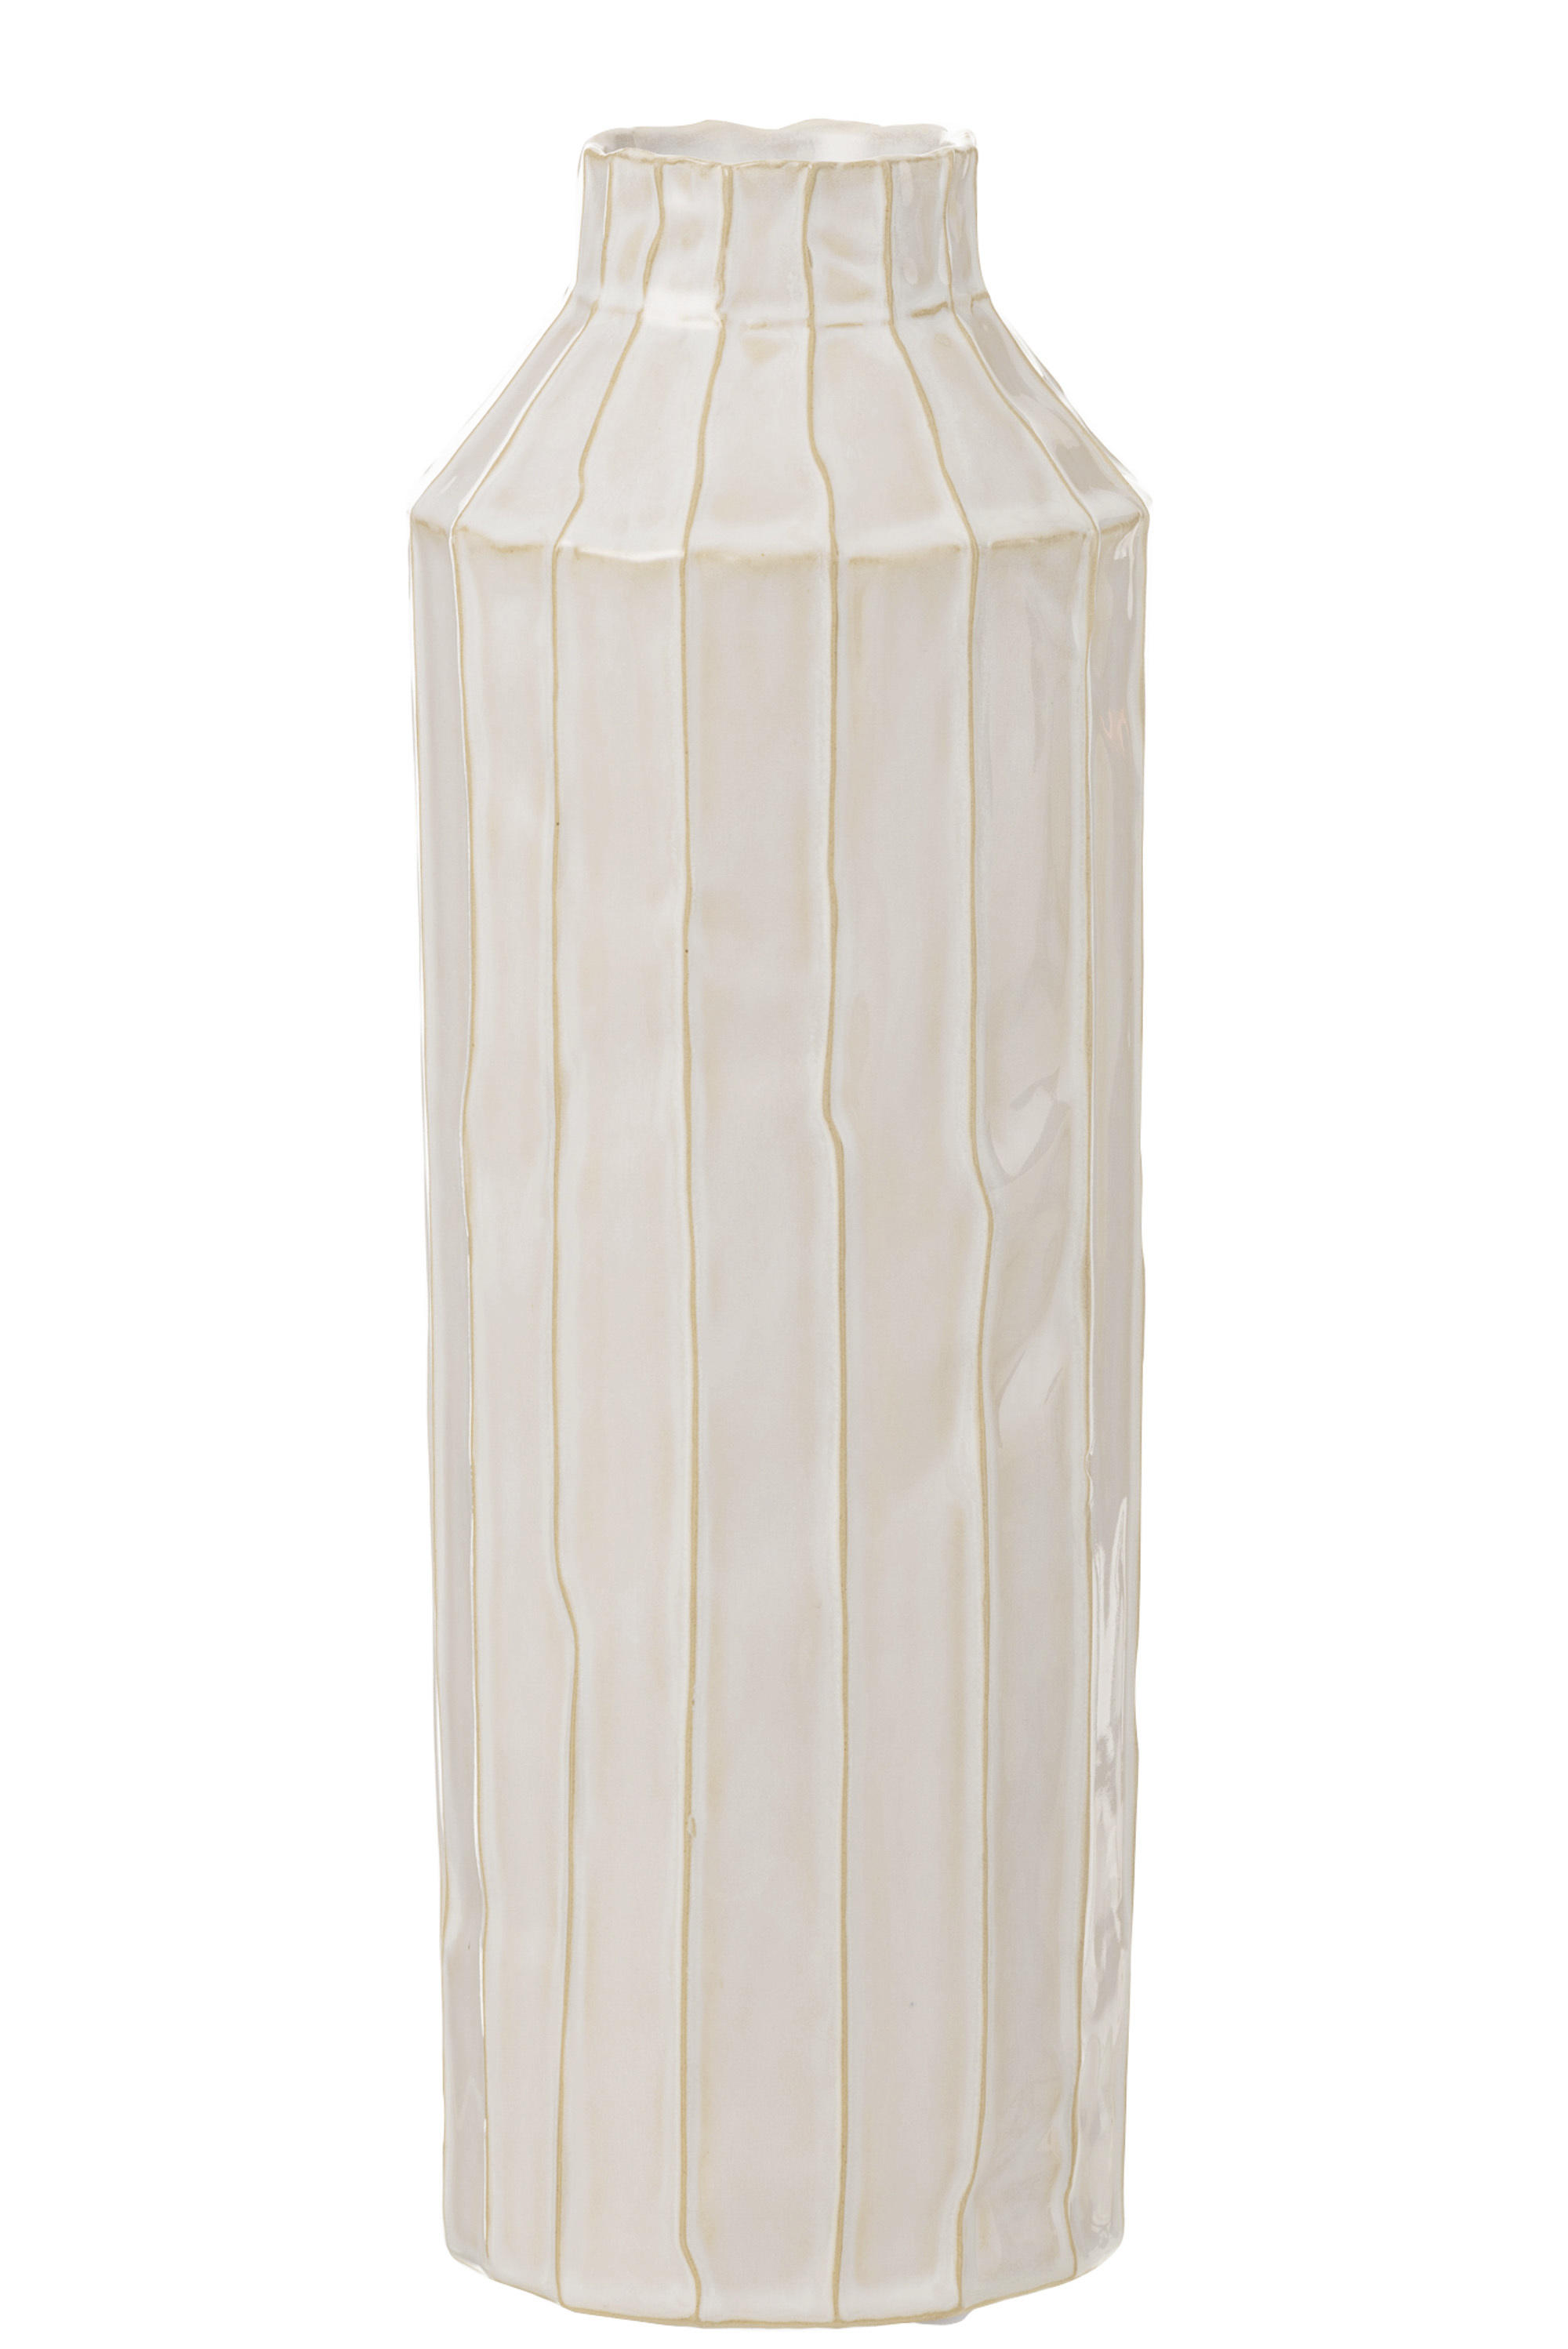 DEKOVASE  - Weiß, Basics, Keramik (12/12/34cm)